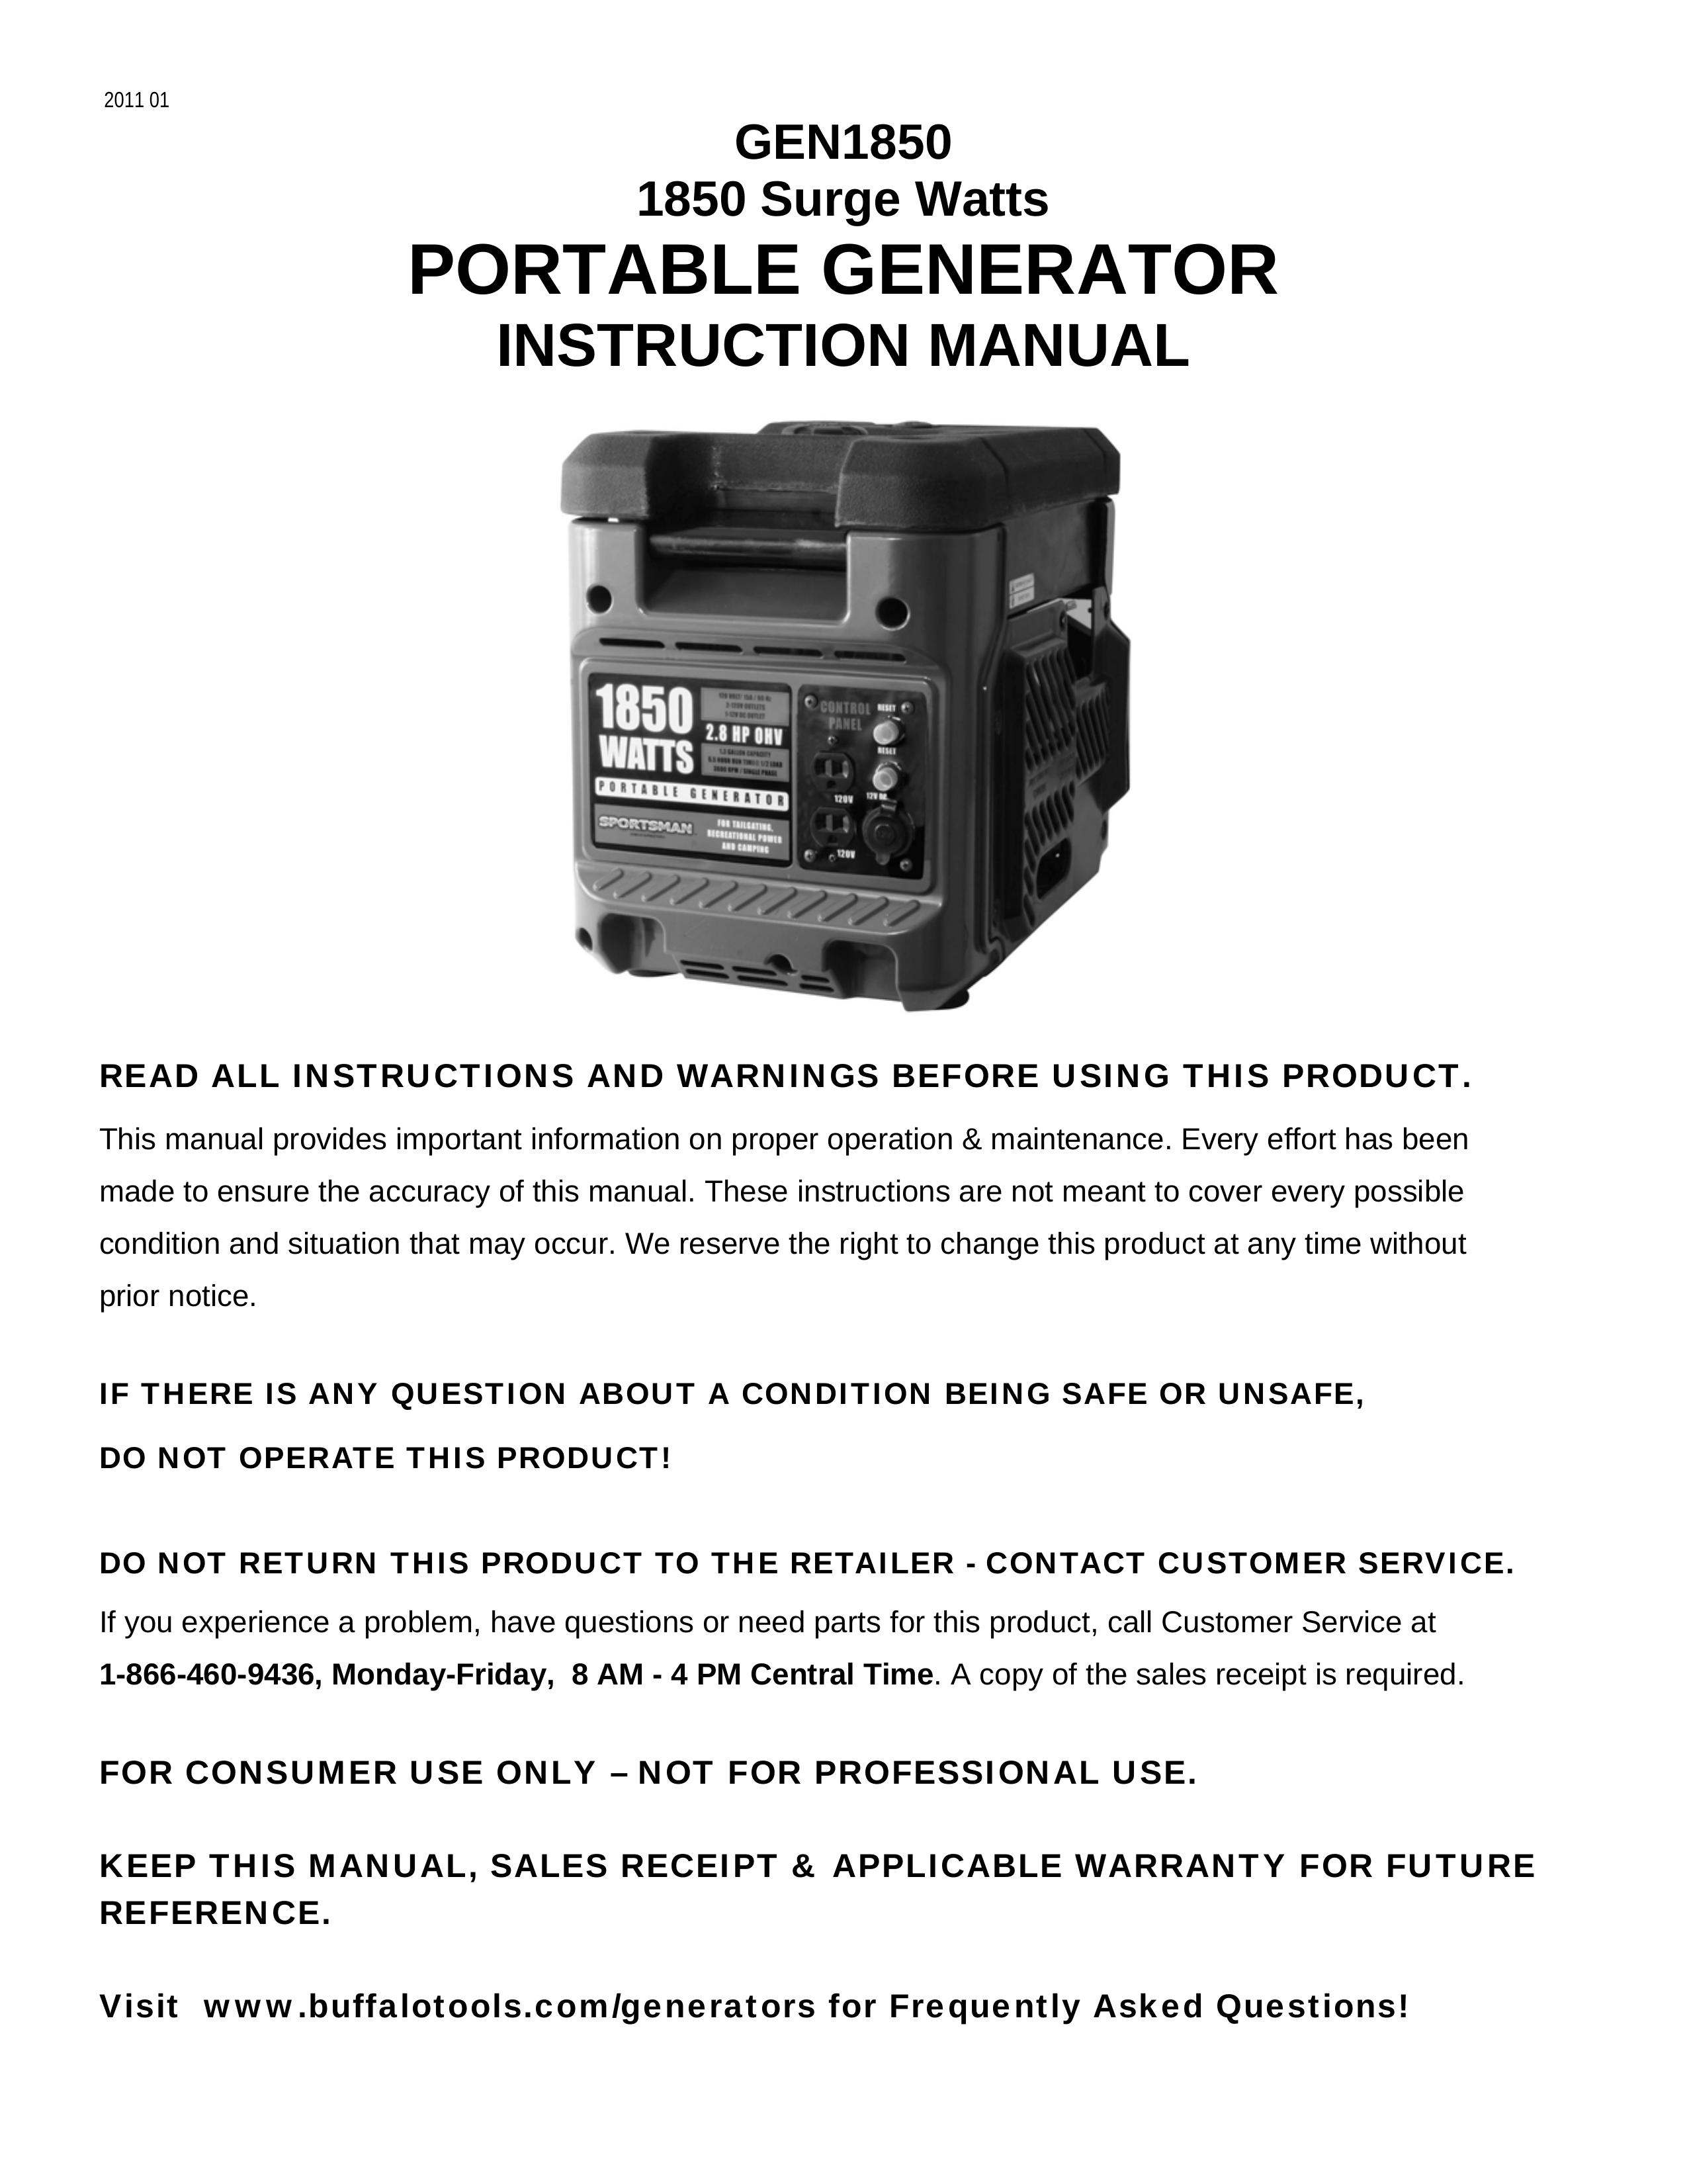 Buffalo Tools GEN1850 Portable Generator User Manual